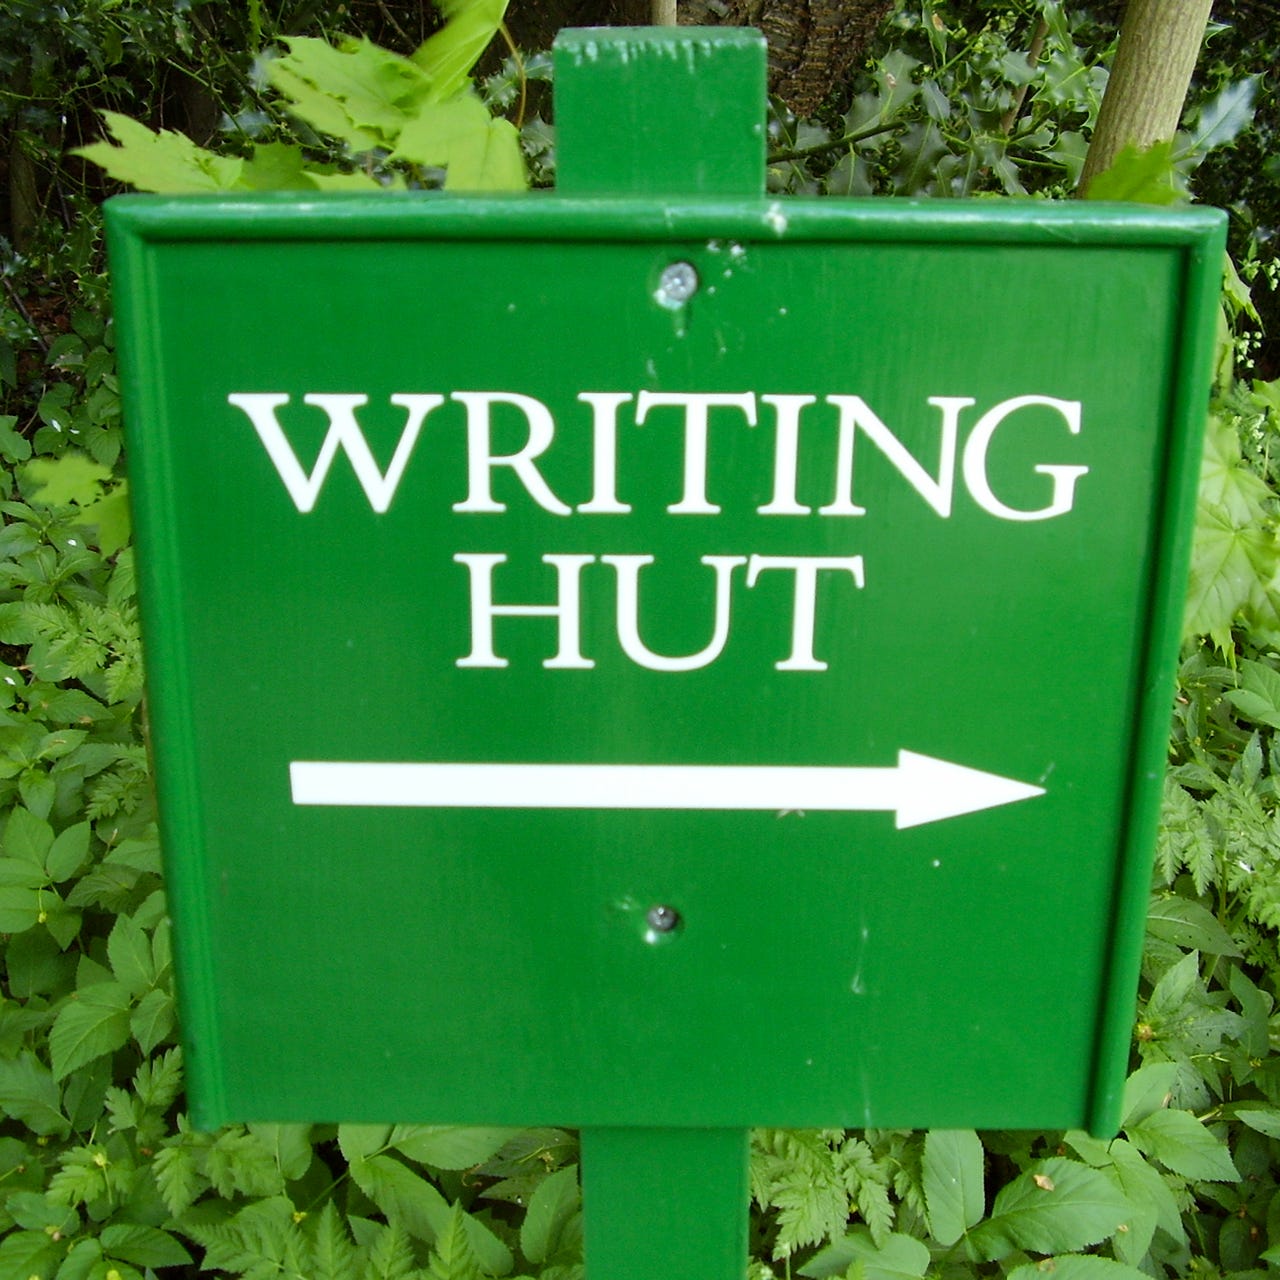 The Writing Hut